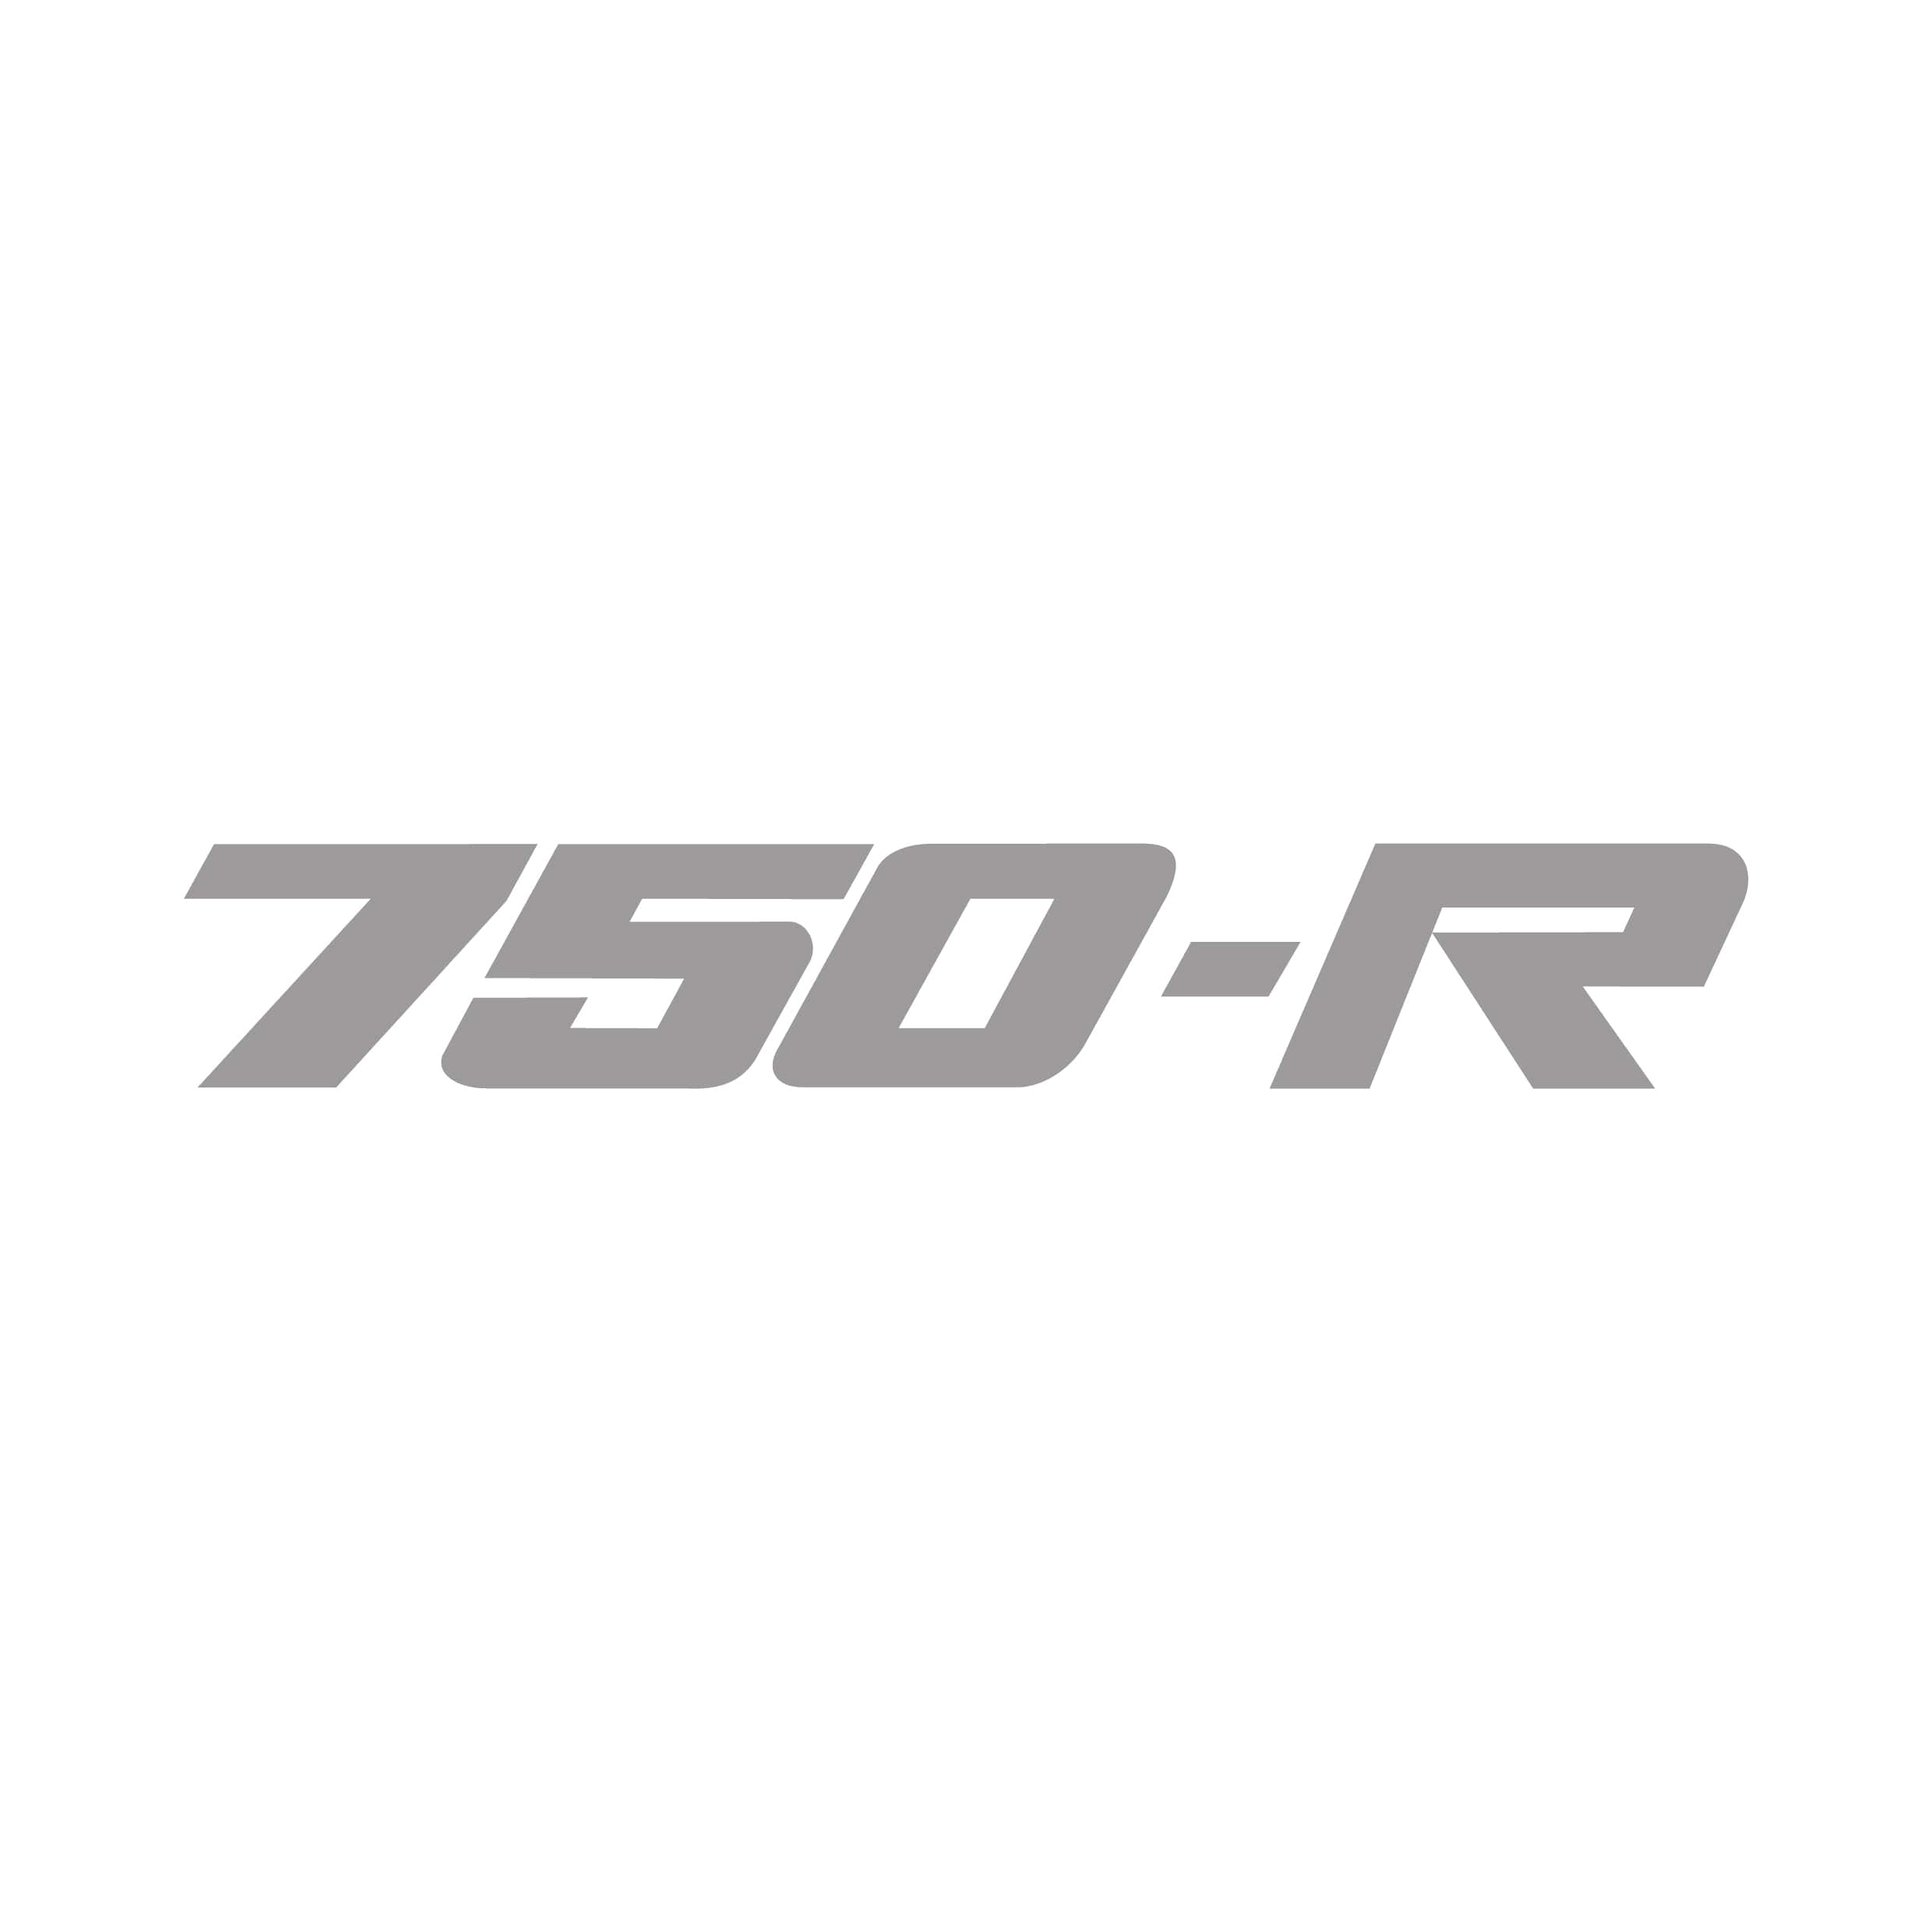 stickers-kawasaki-750r-ref45-autocollant-moto-sticker-deux-roue-autocollants-decals-sponsors-tuning-sport-logo-bike-scooter-min